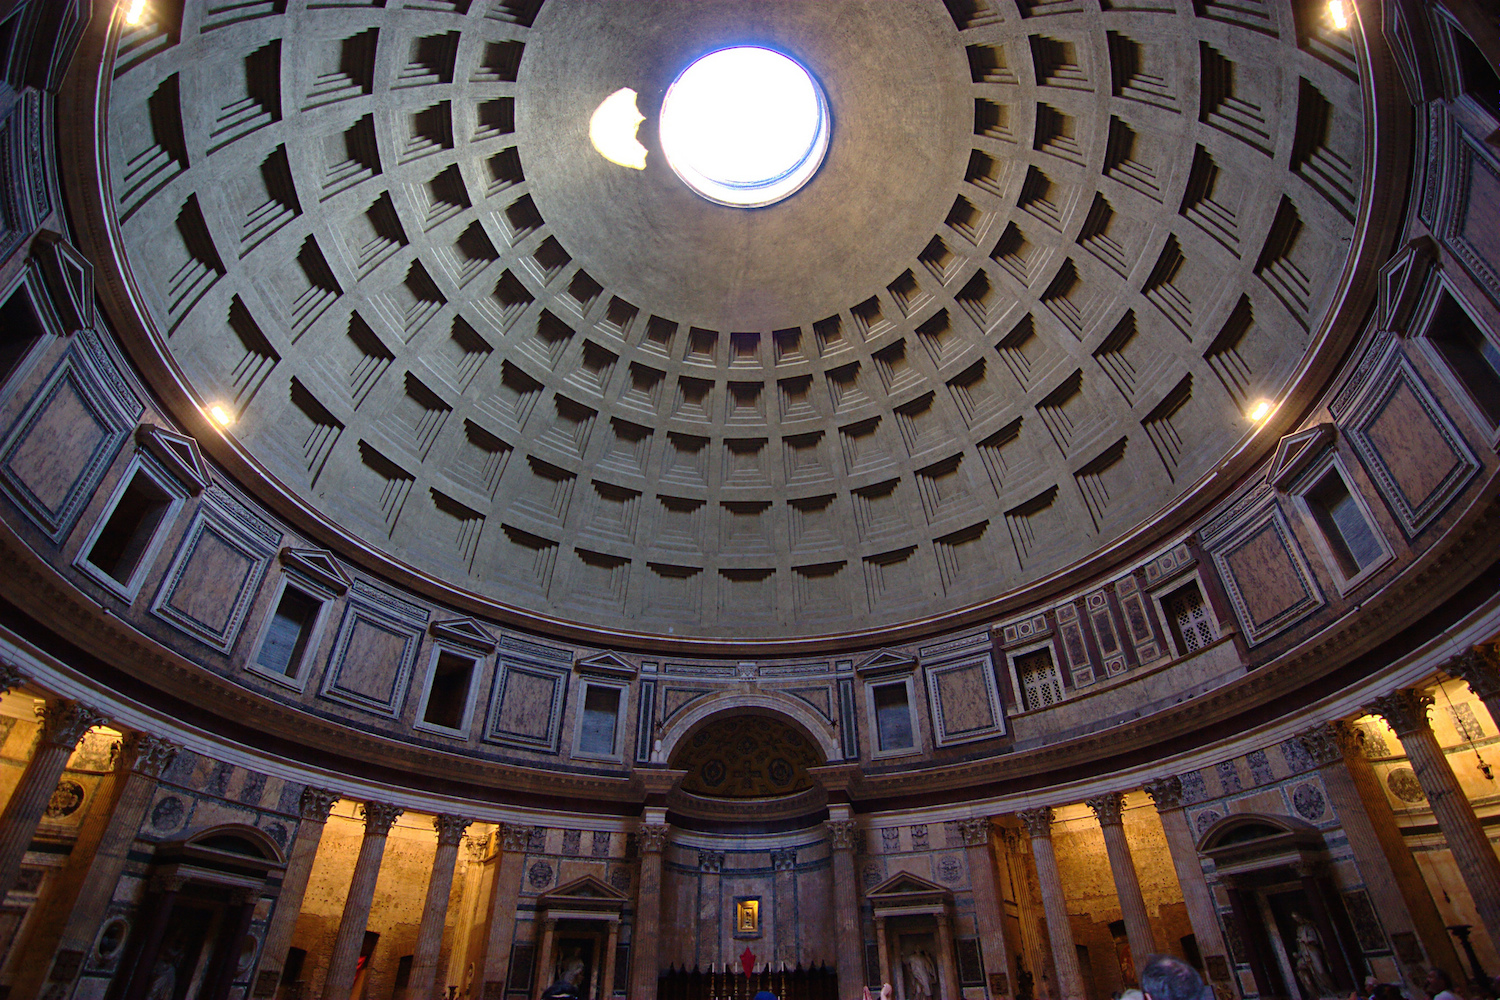 The Pantheon's impressive dome. Image by Biker Jun / CC BY-SA 2.0